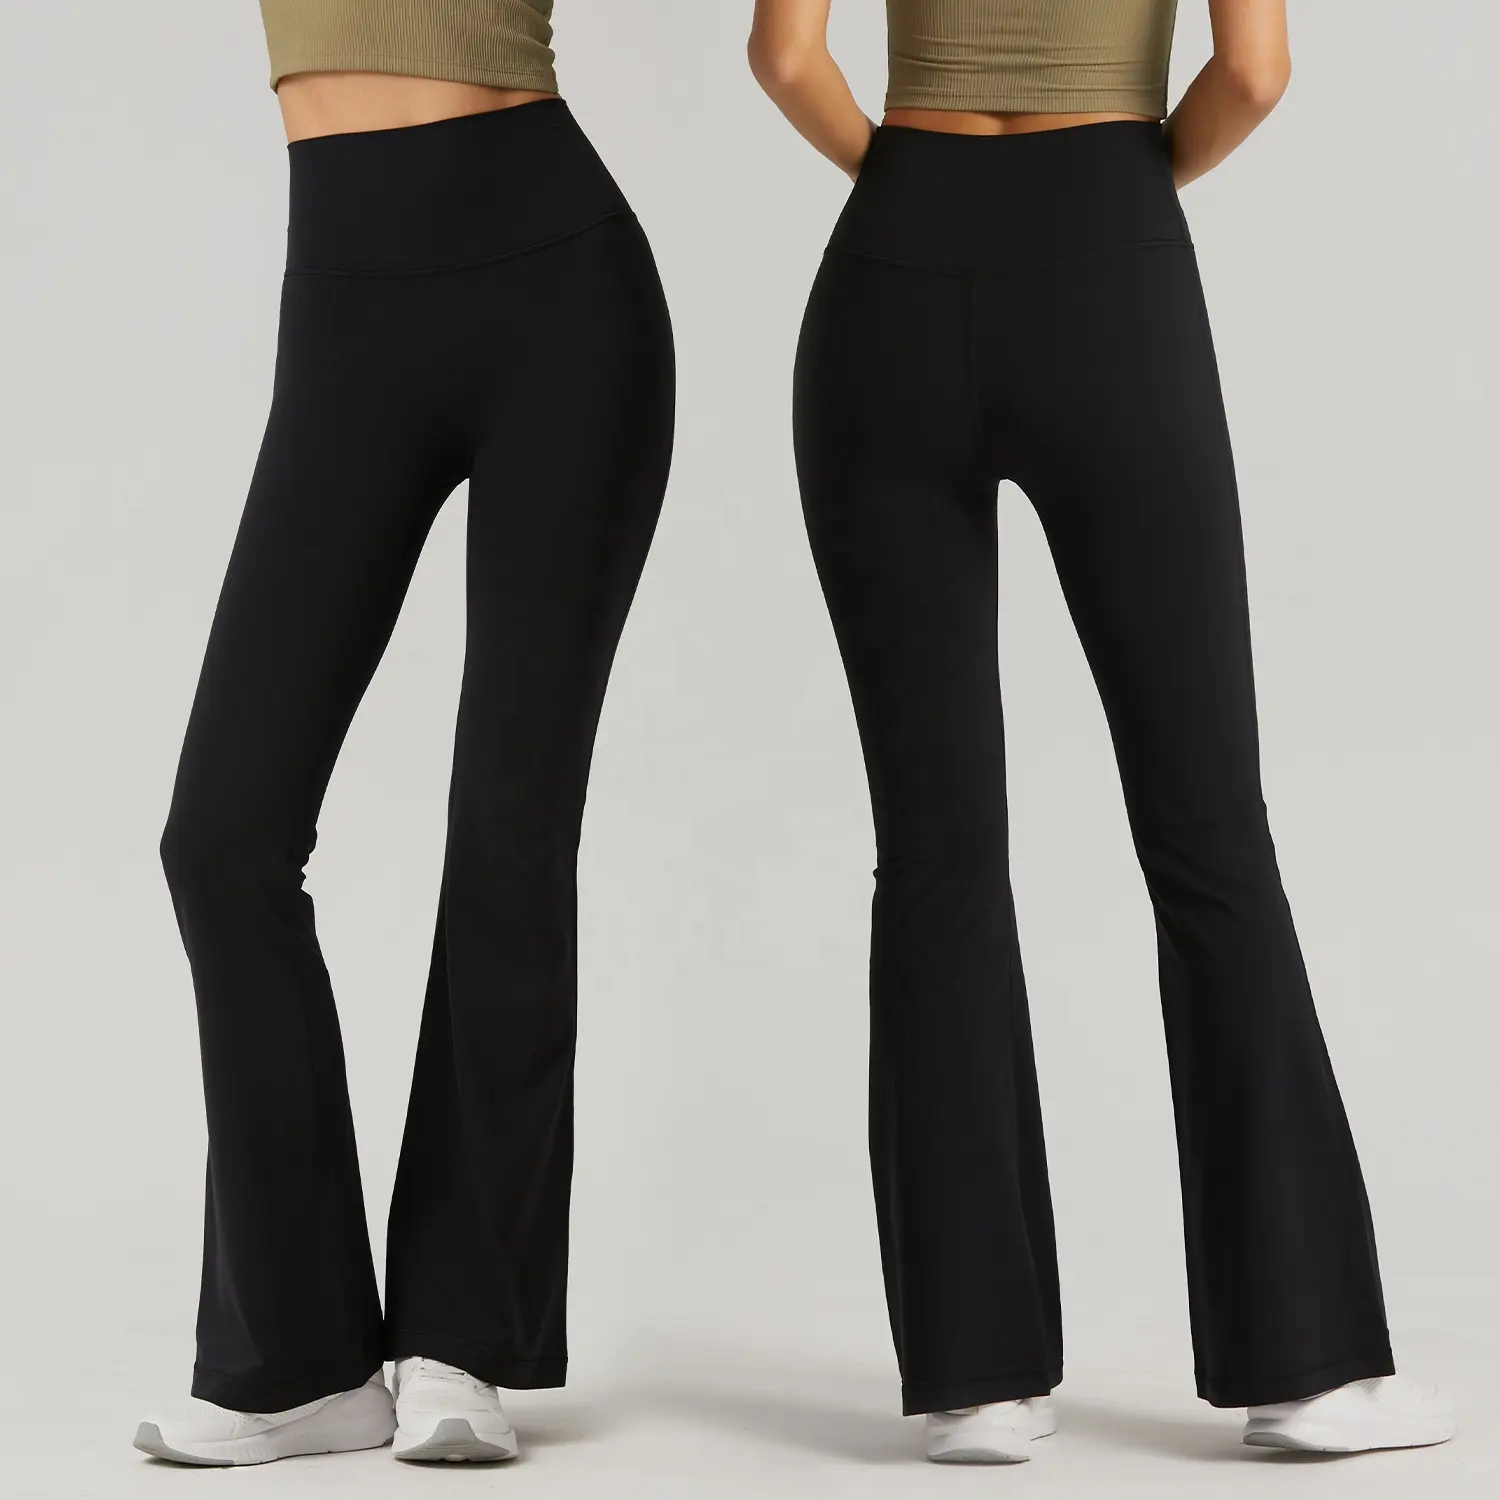 LOLOLULU Push Up de alta calidad para mujer Control de barriga Pantalones de yoga Señoras Spandex Flare Leggings